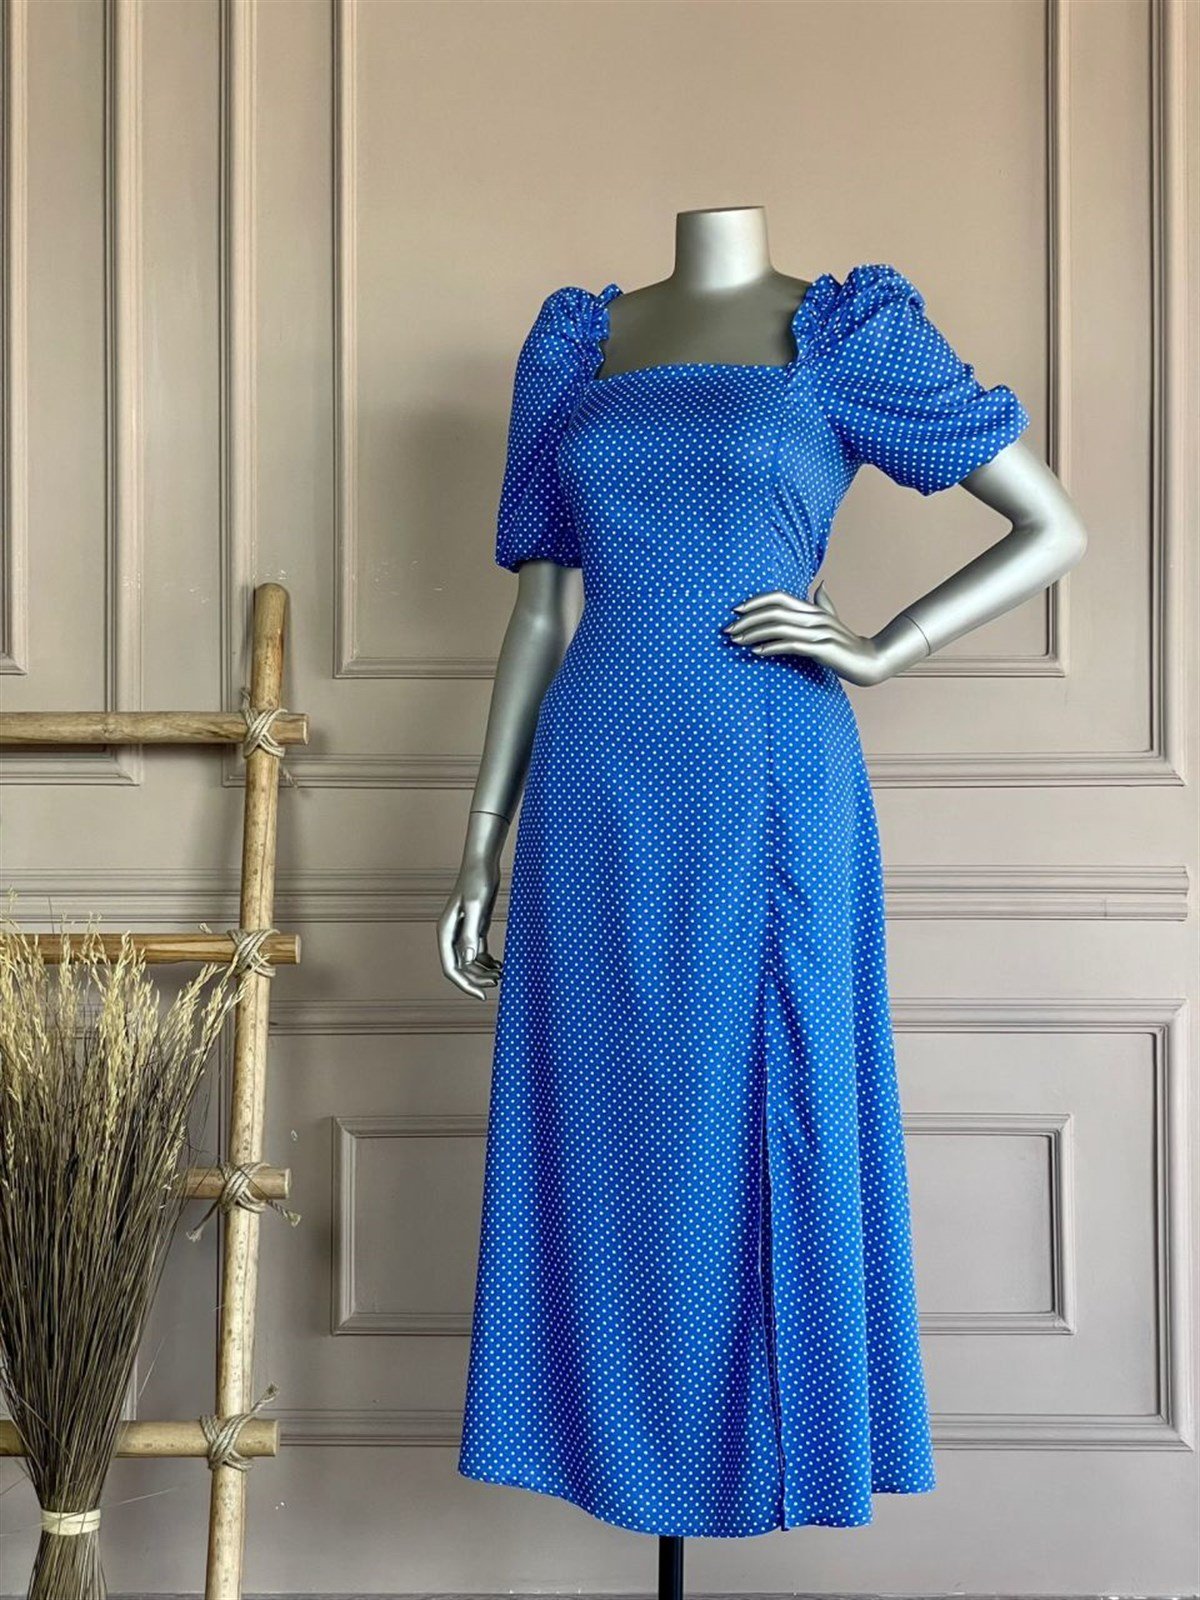 Karpuz Kol Puantiyeli Elbise (Mavi) 279,99 ₺